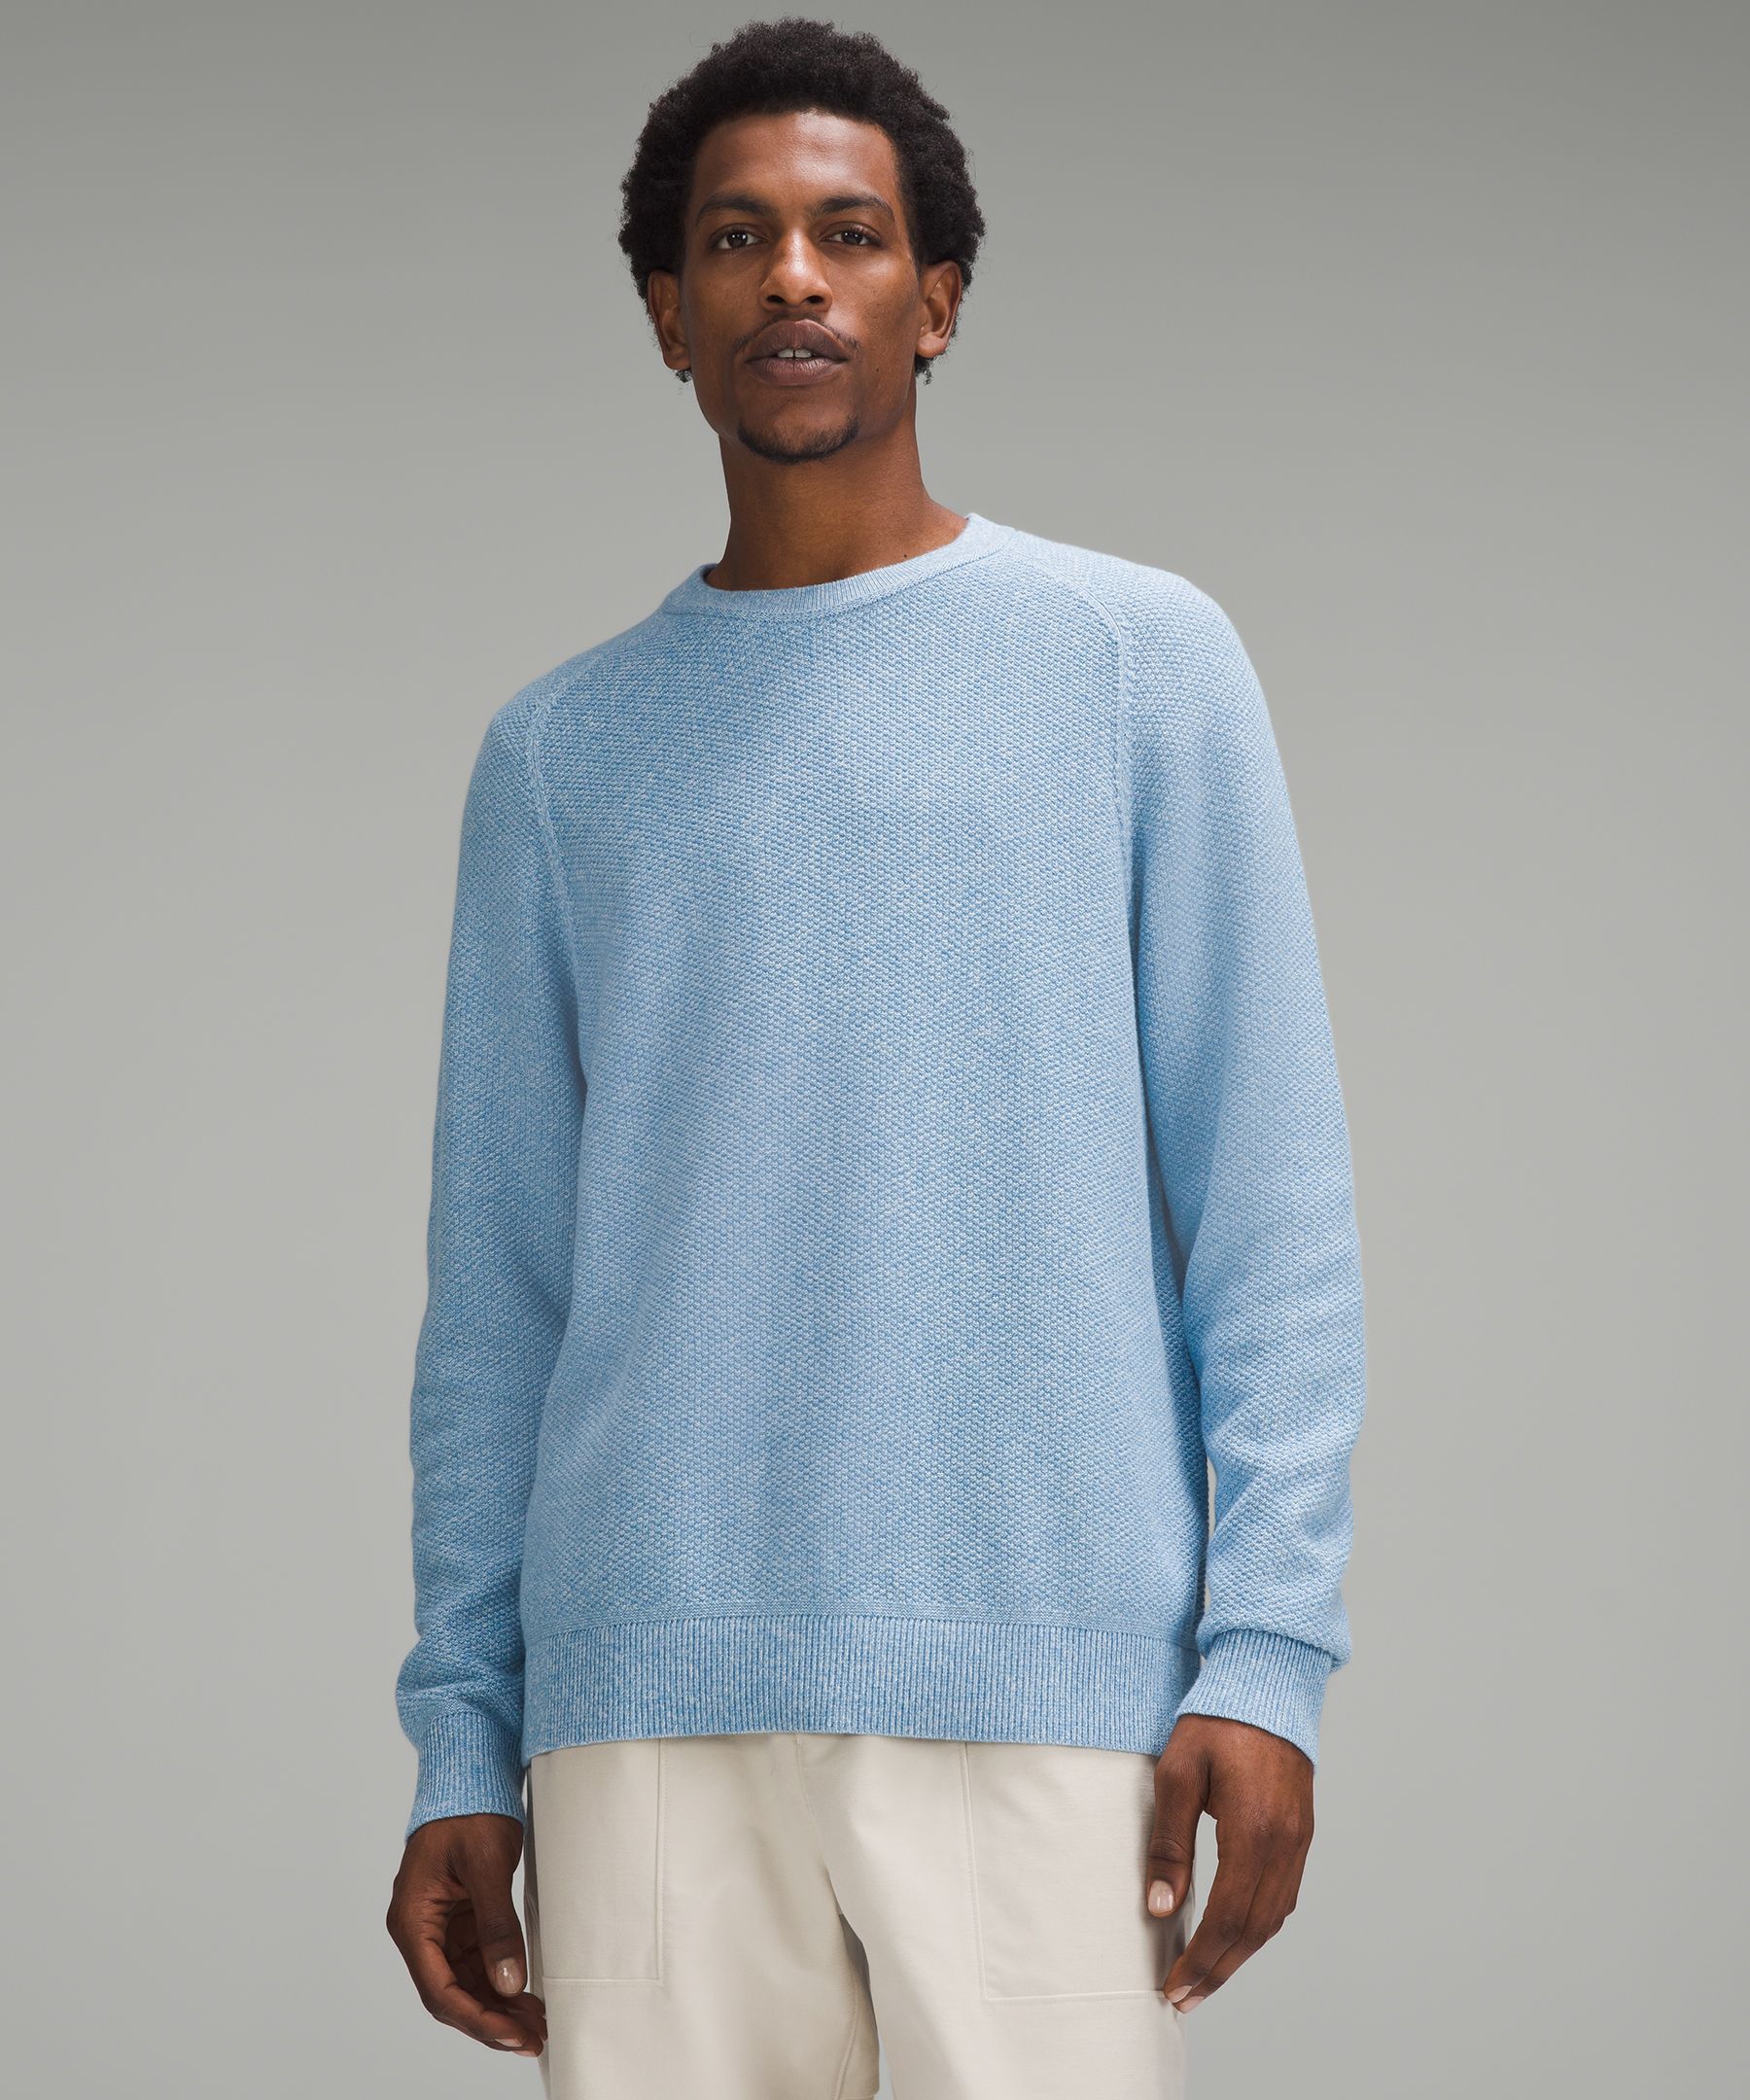 Textured Knit Crewneck Sweater  Men's Hoodies & Sweatshirts